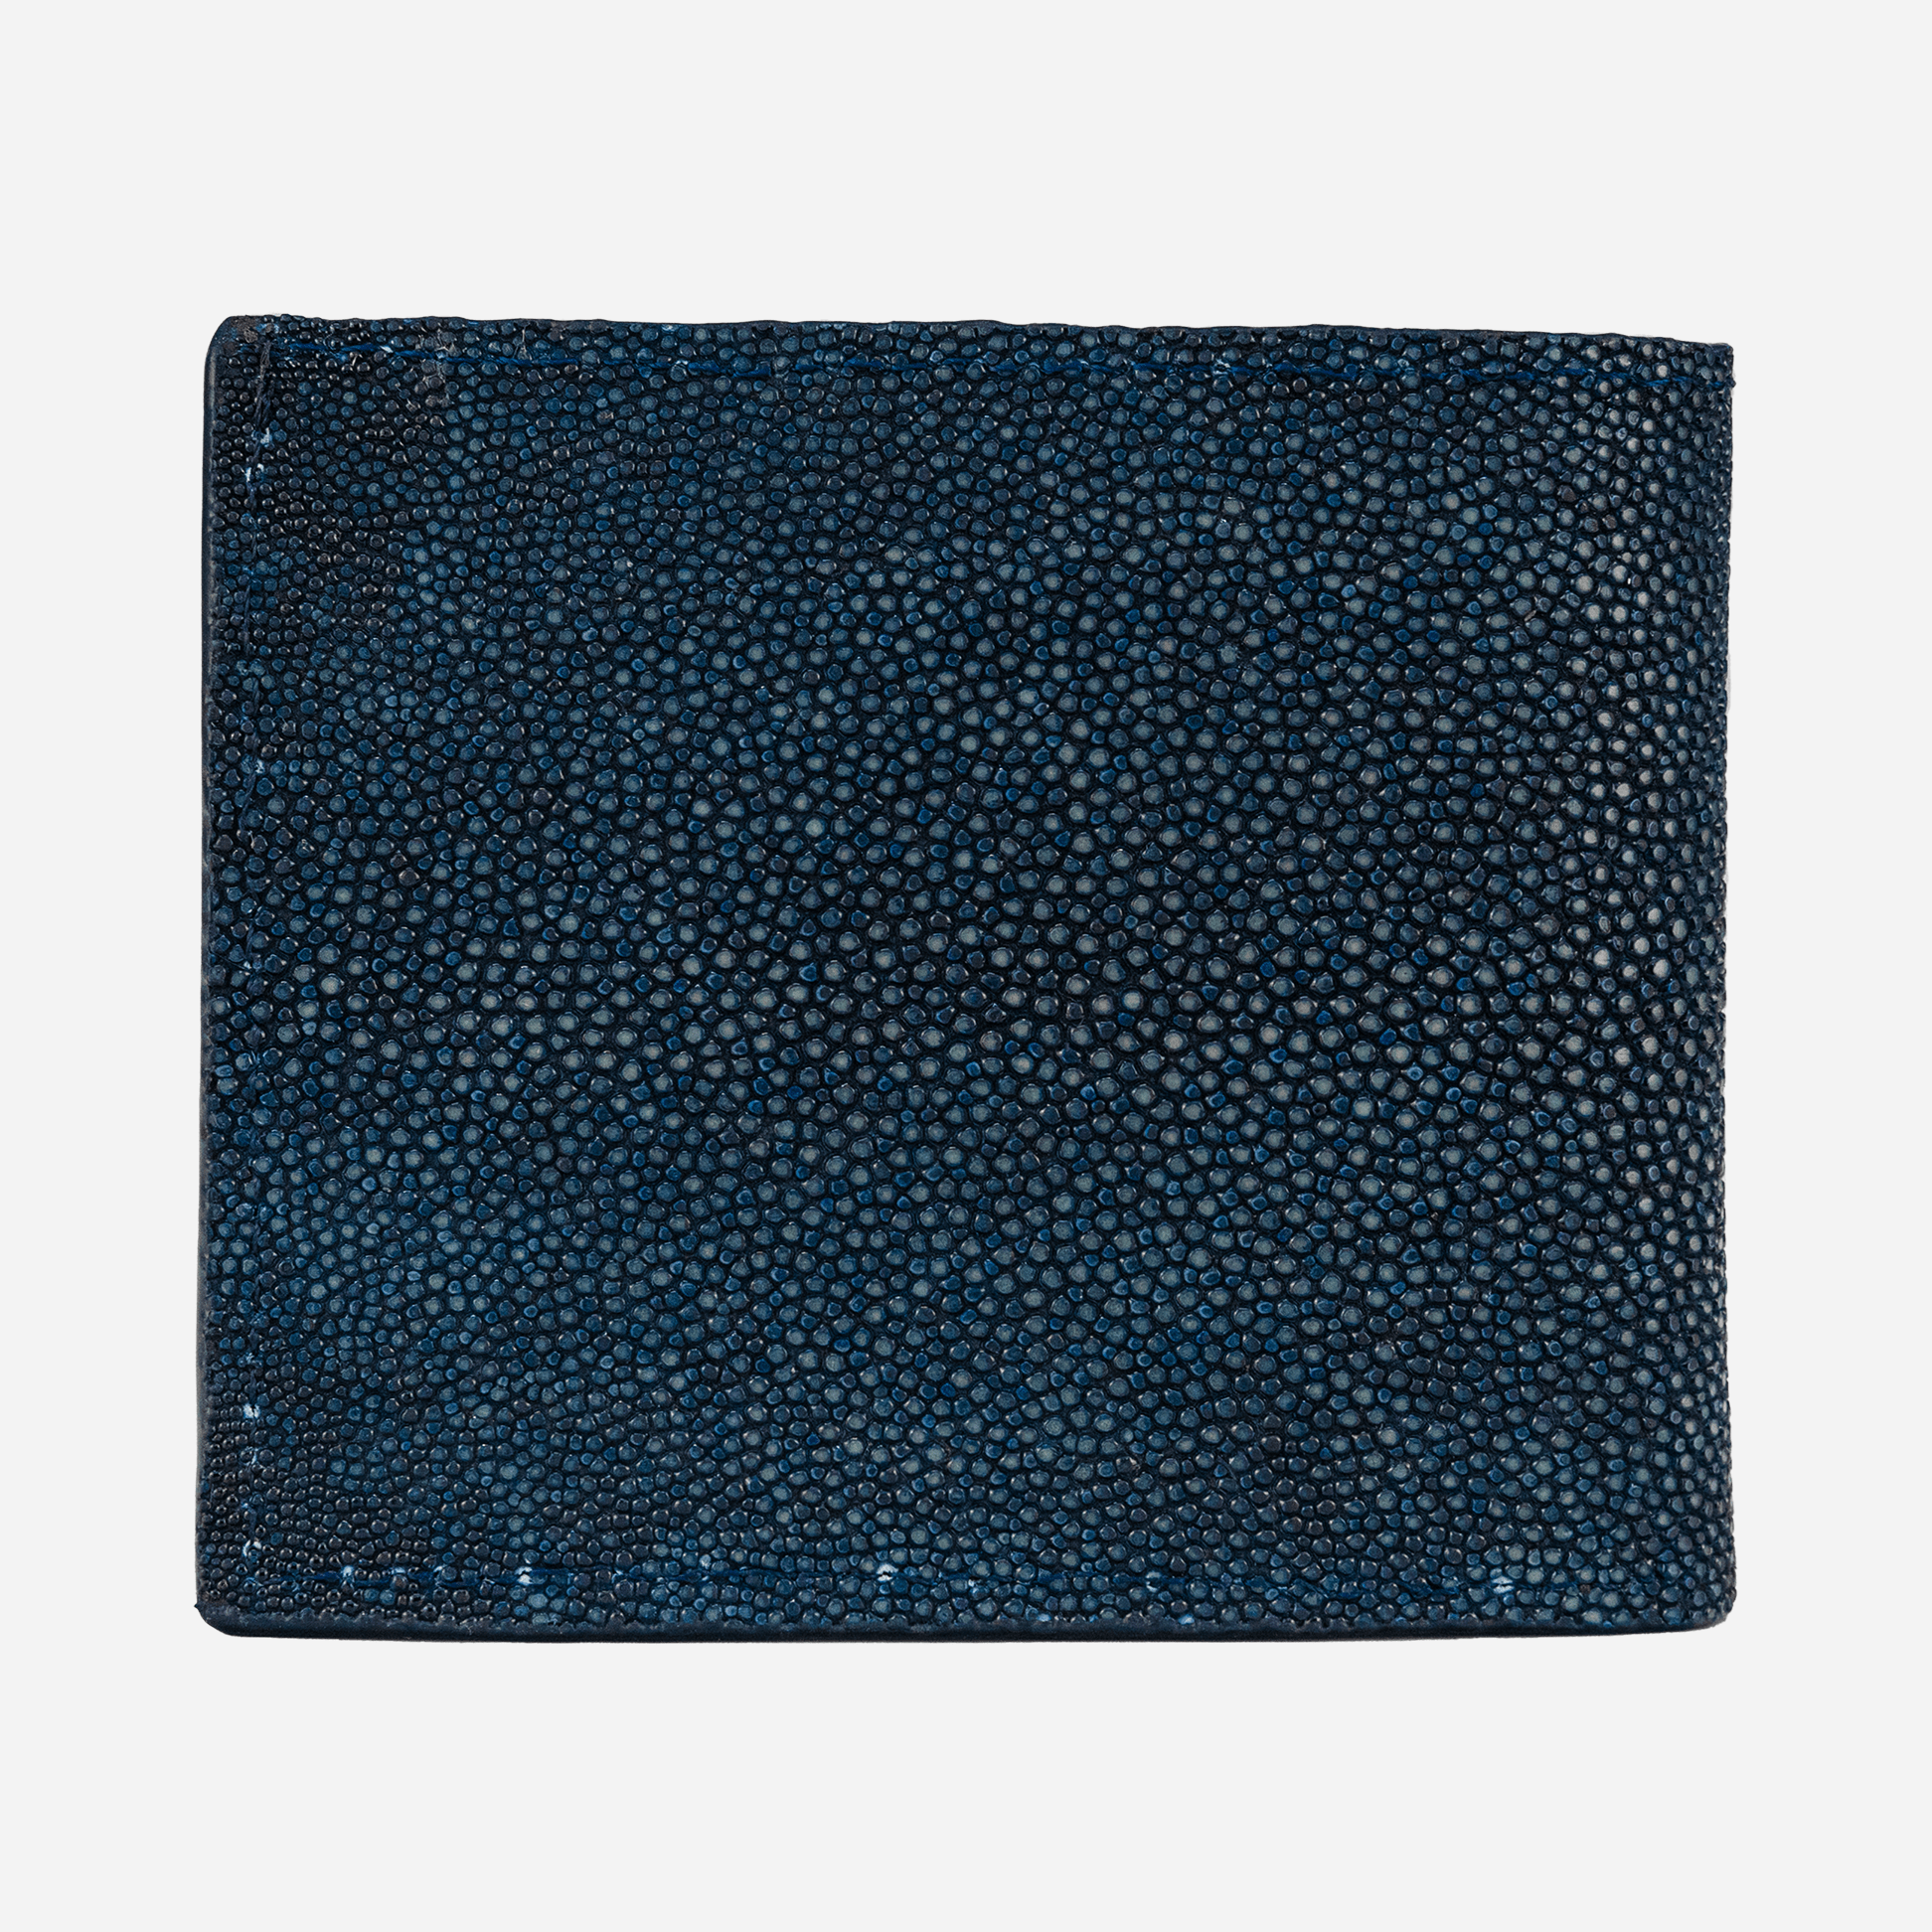 Veneno Leather Goods Cartera "The Grid" Stingray Blue